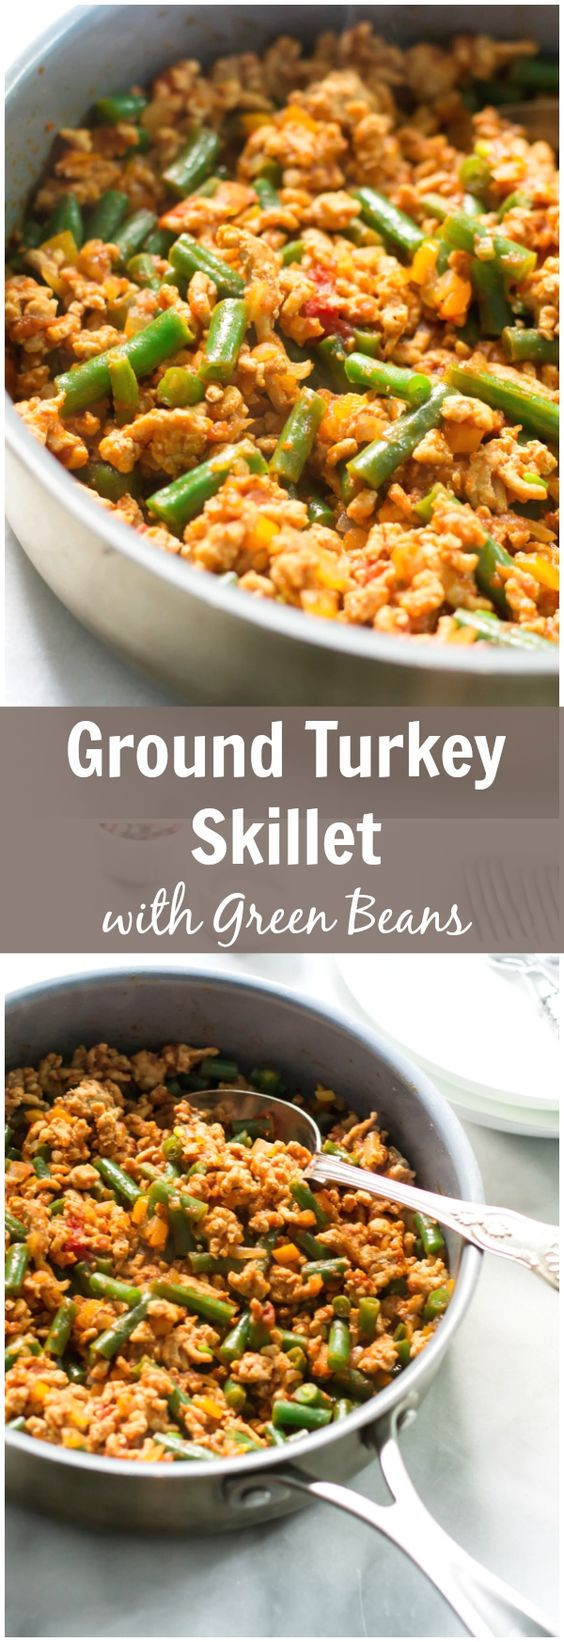 Ground Turkey Recipes Easy
 Pinterest • The world’s catalog of ideas